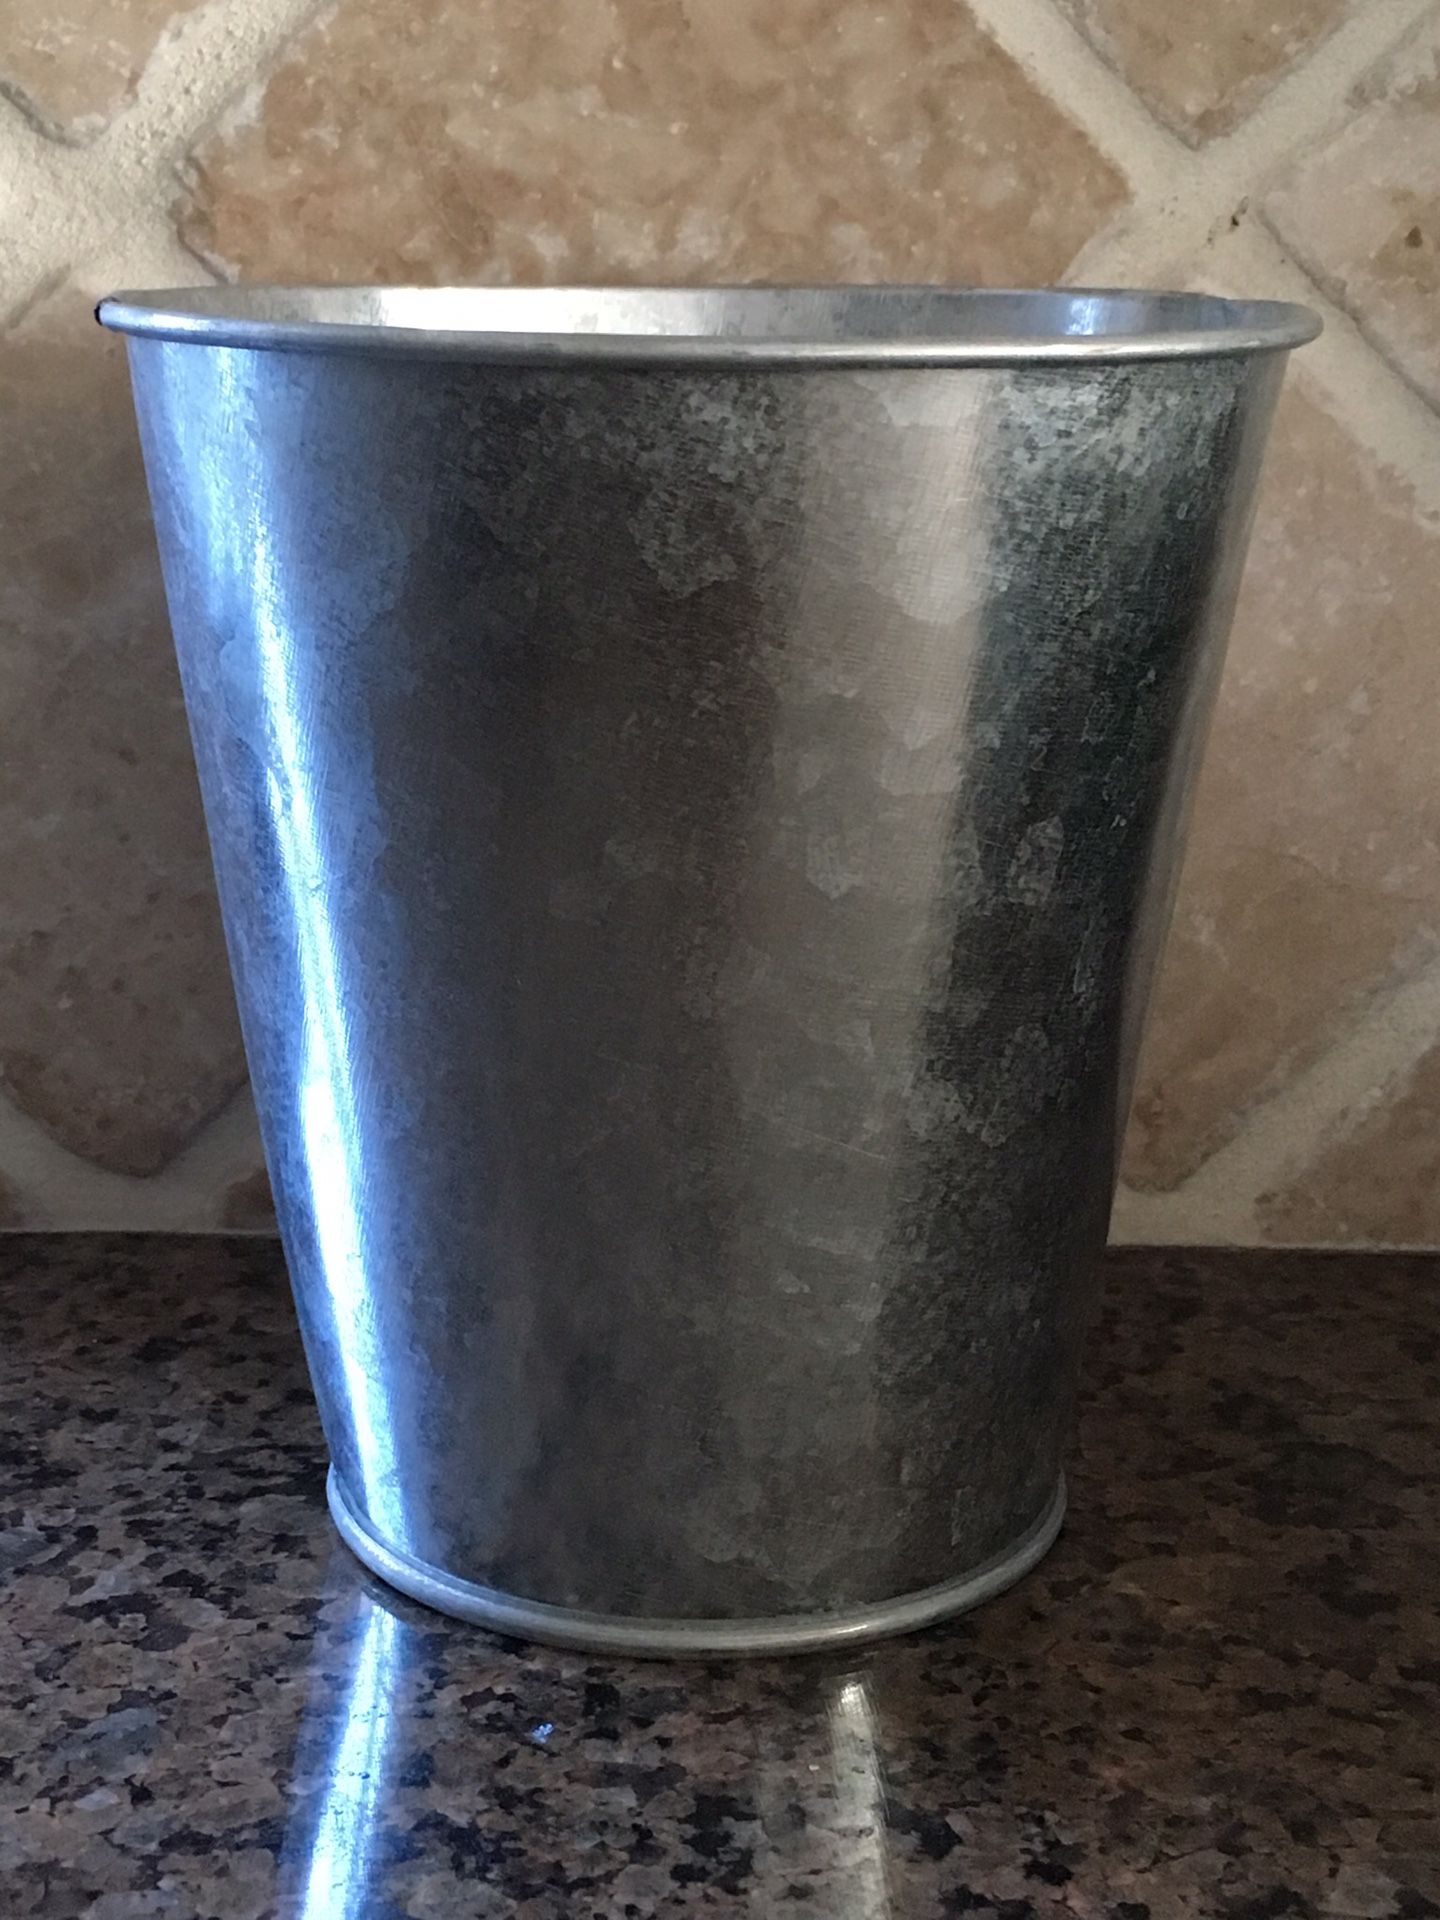 galvanized steel metal buckets / planters / pails / pots for party decor - NEW